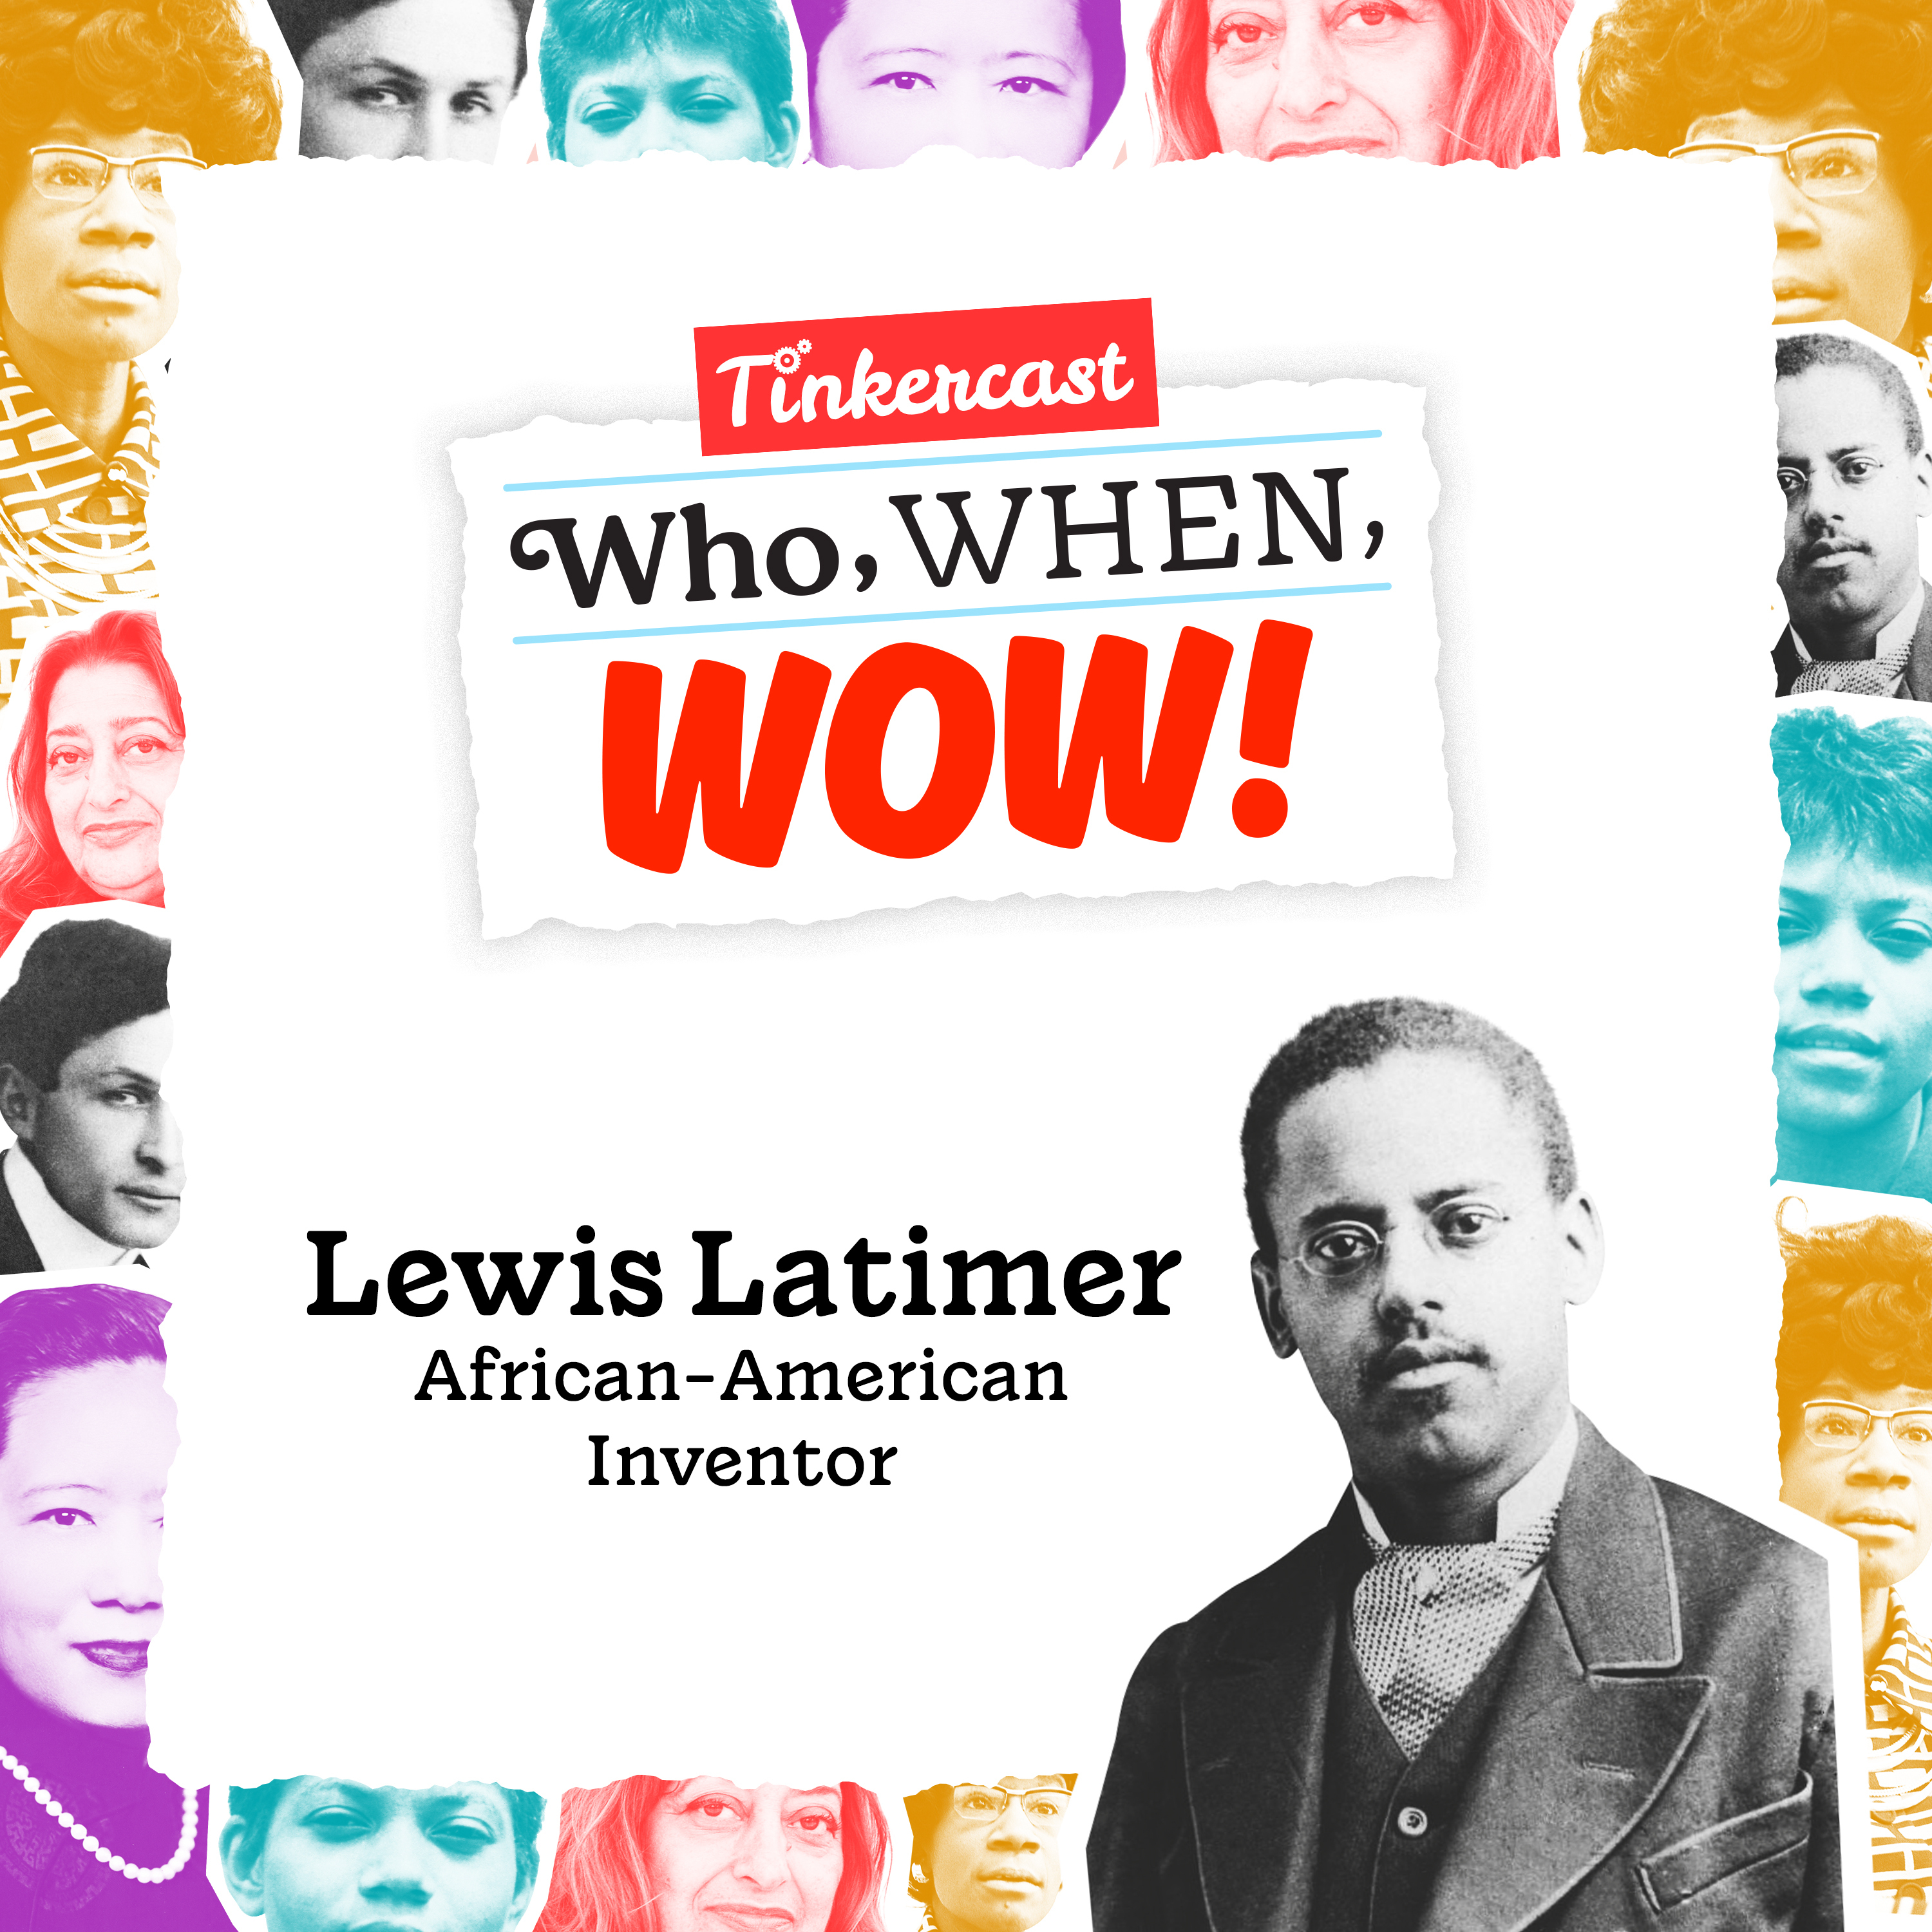 Lewis Latimer: Inventor